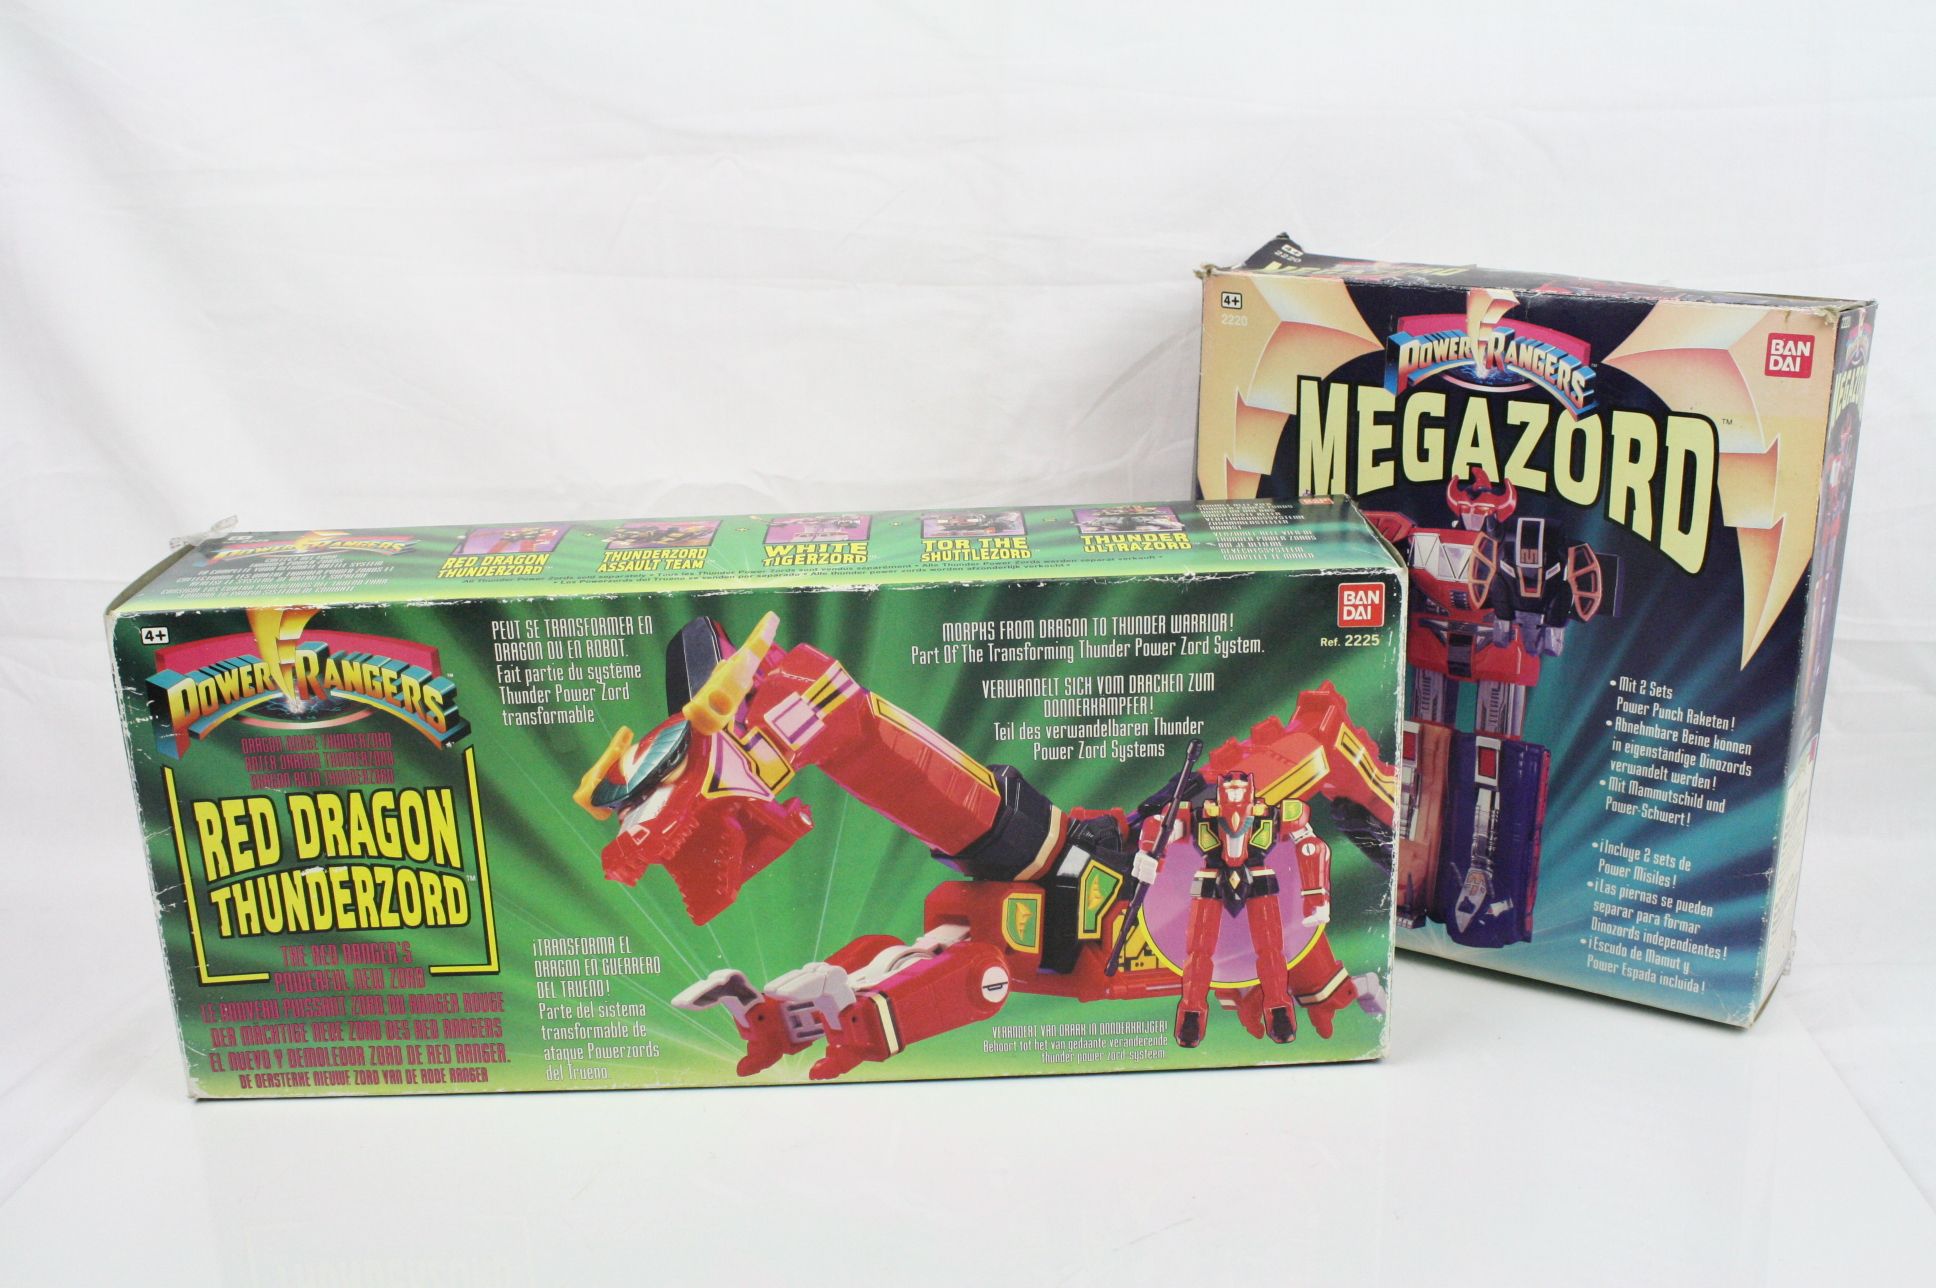 Boxed Bandai Power Rangers 2225 Red Dragon Thunderzord plus a Bandai 2220 Megazord box with - Image 2 of 7